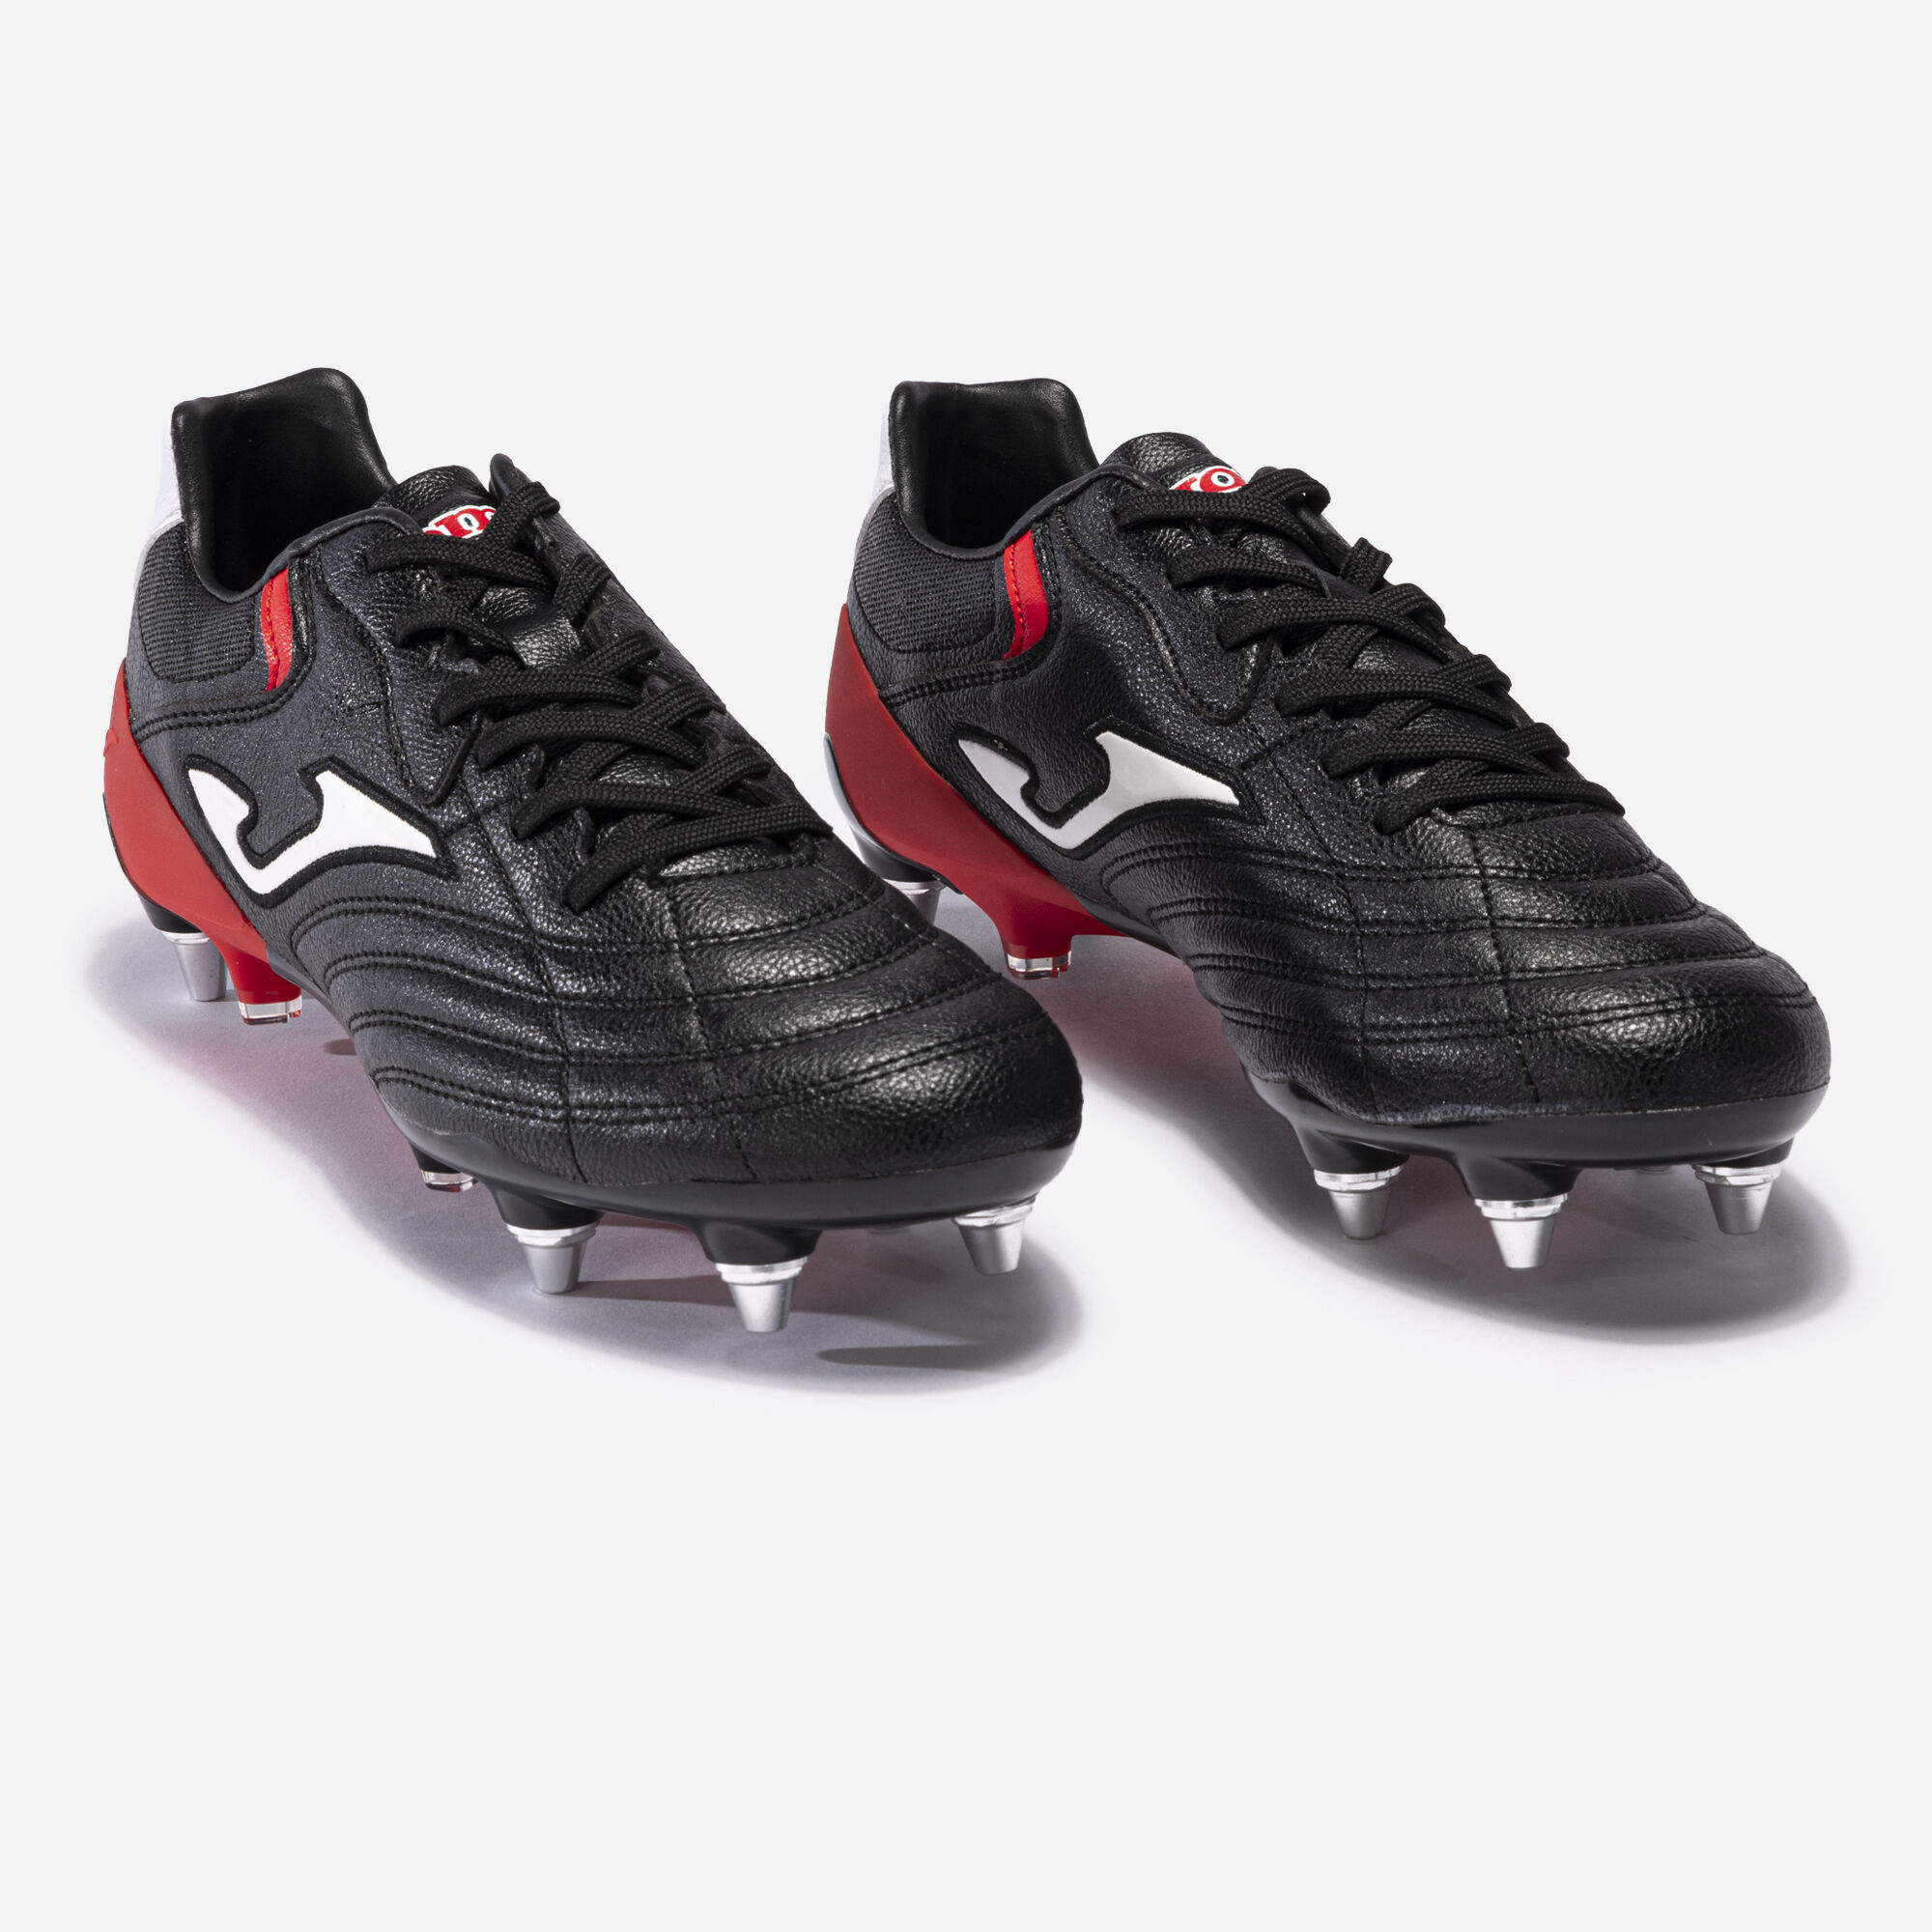 Chaussures football Aguila Cup 23 terrain souple SG noir rouge